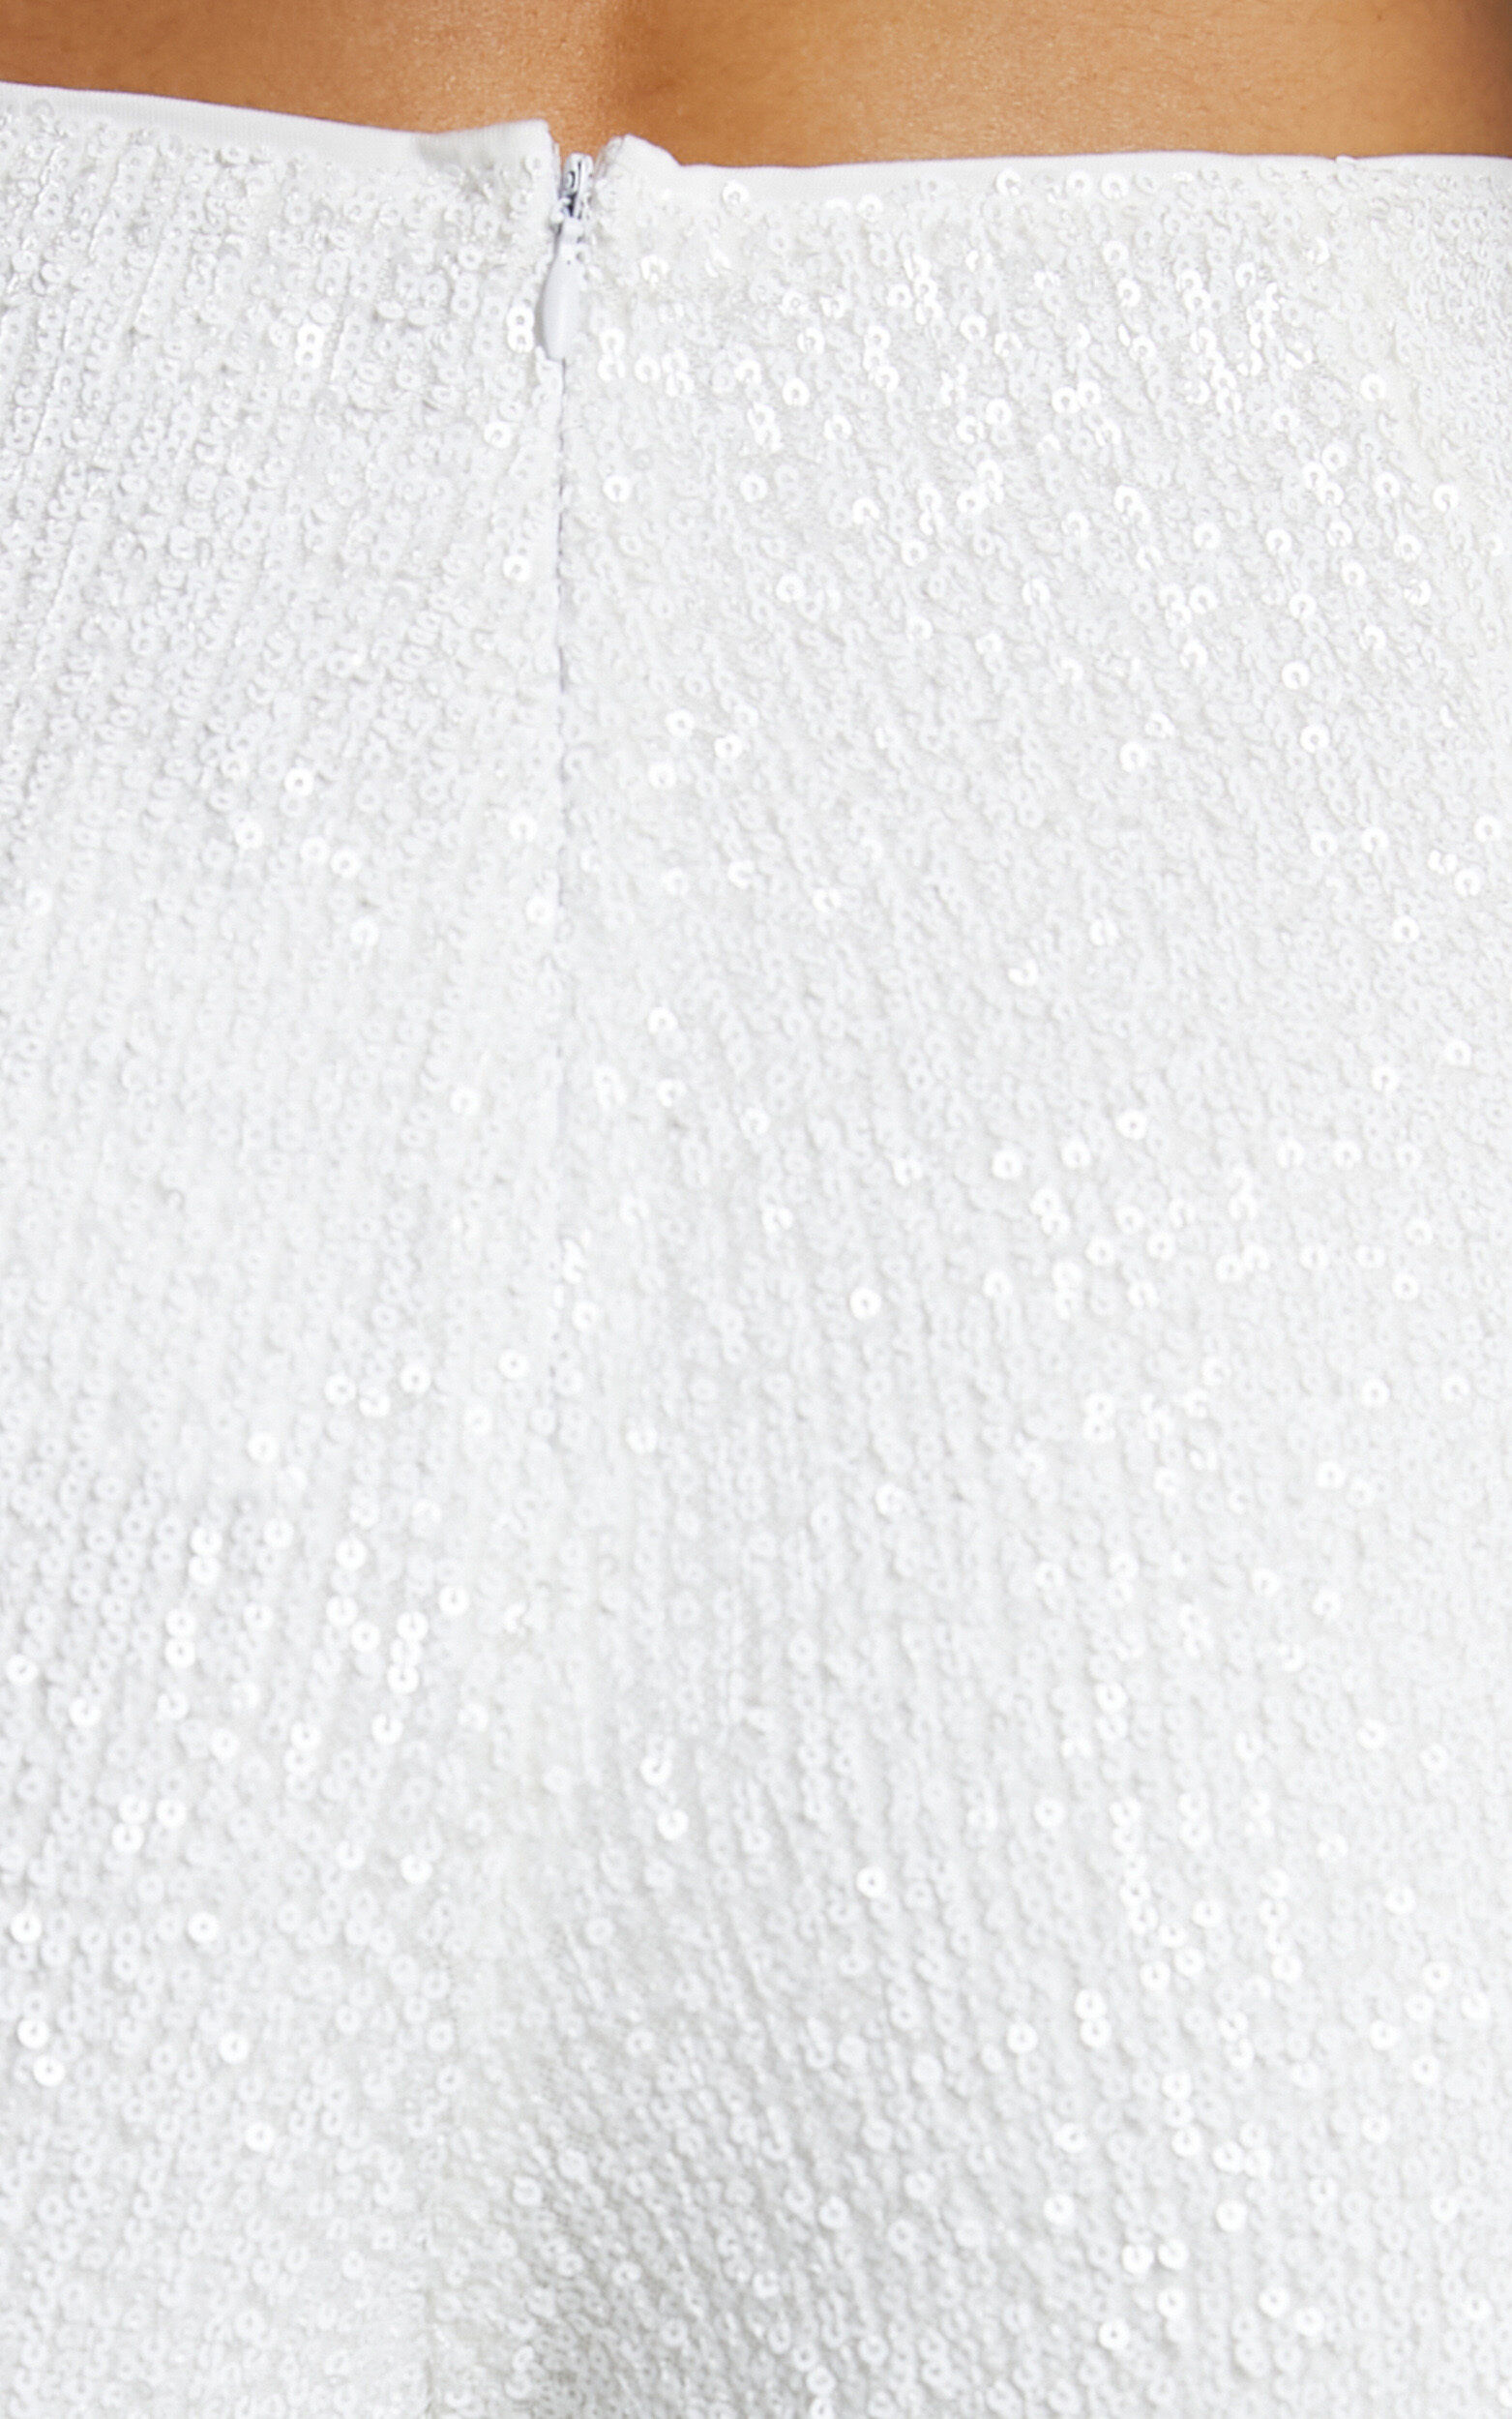 Julien Jumpsuit - Backless Wide Leg Cowl Neck Sequin Jumpsuit in White